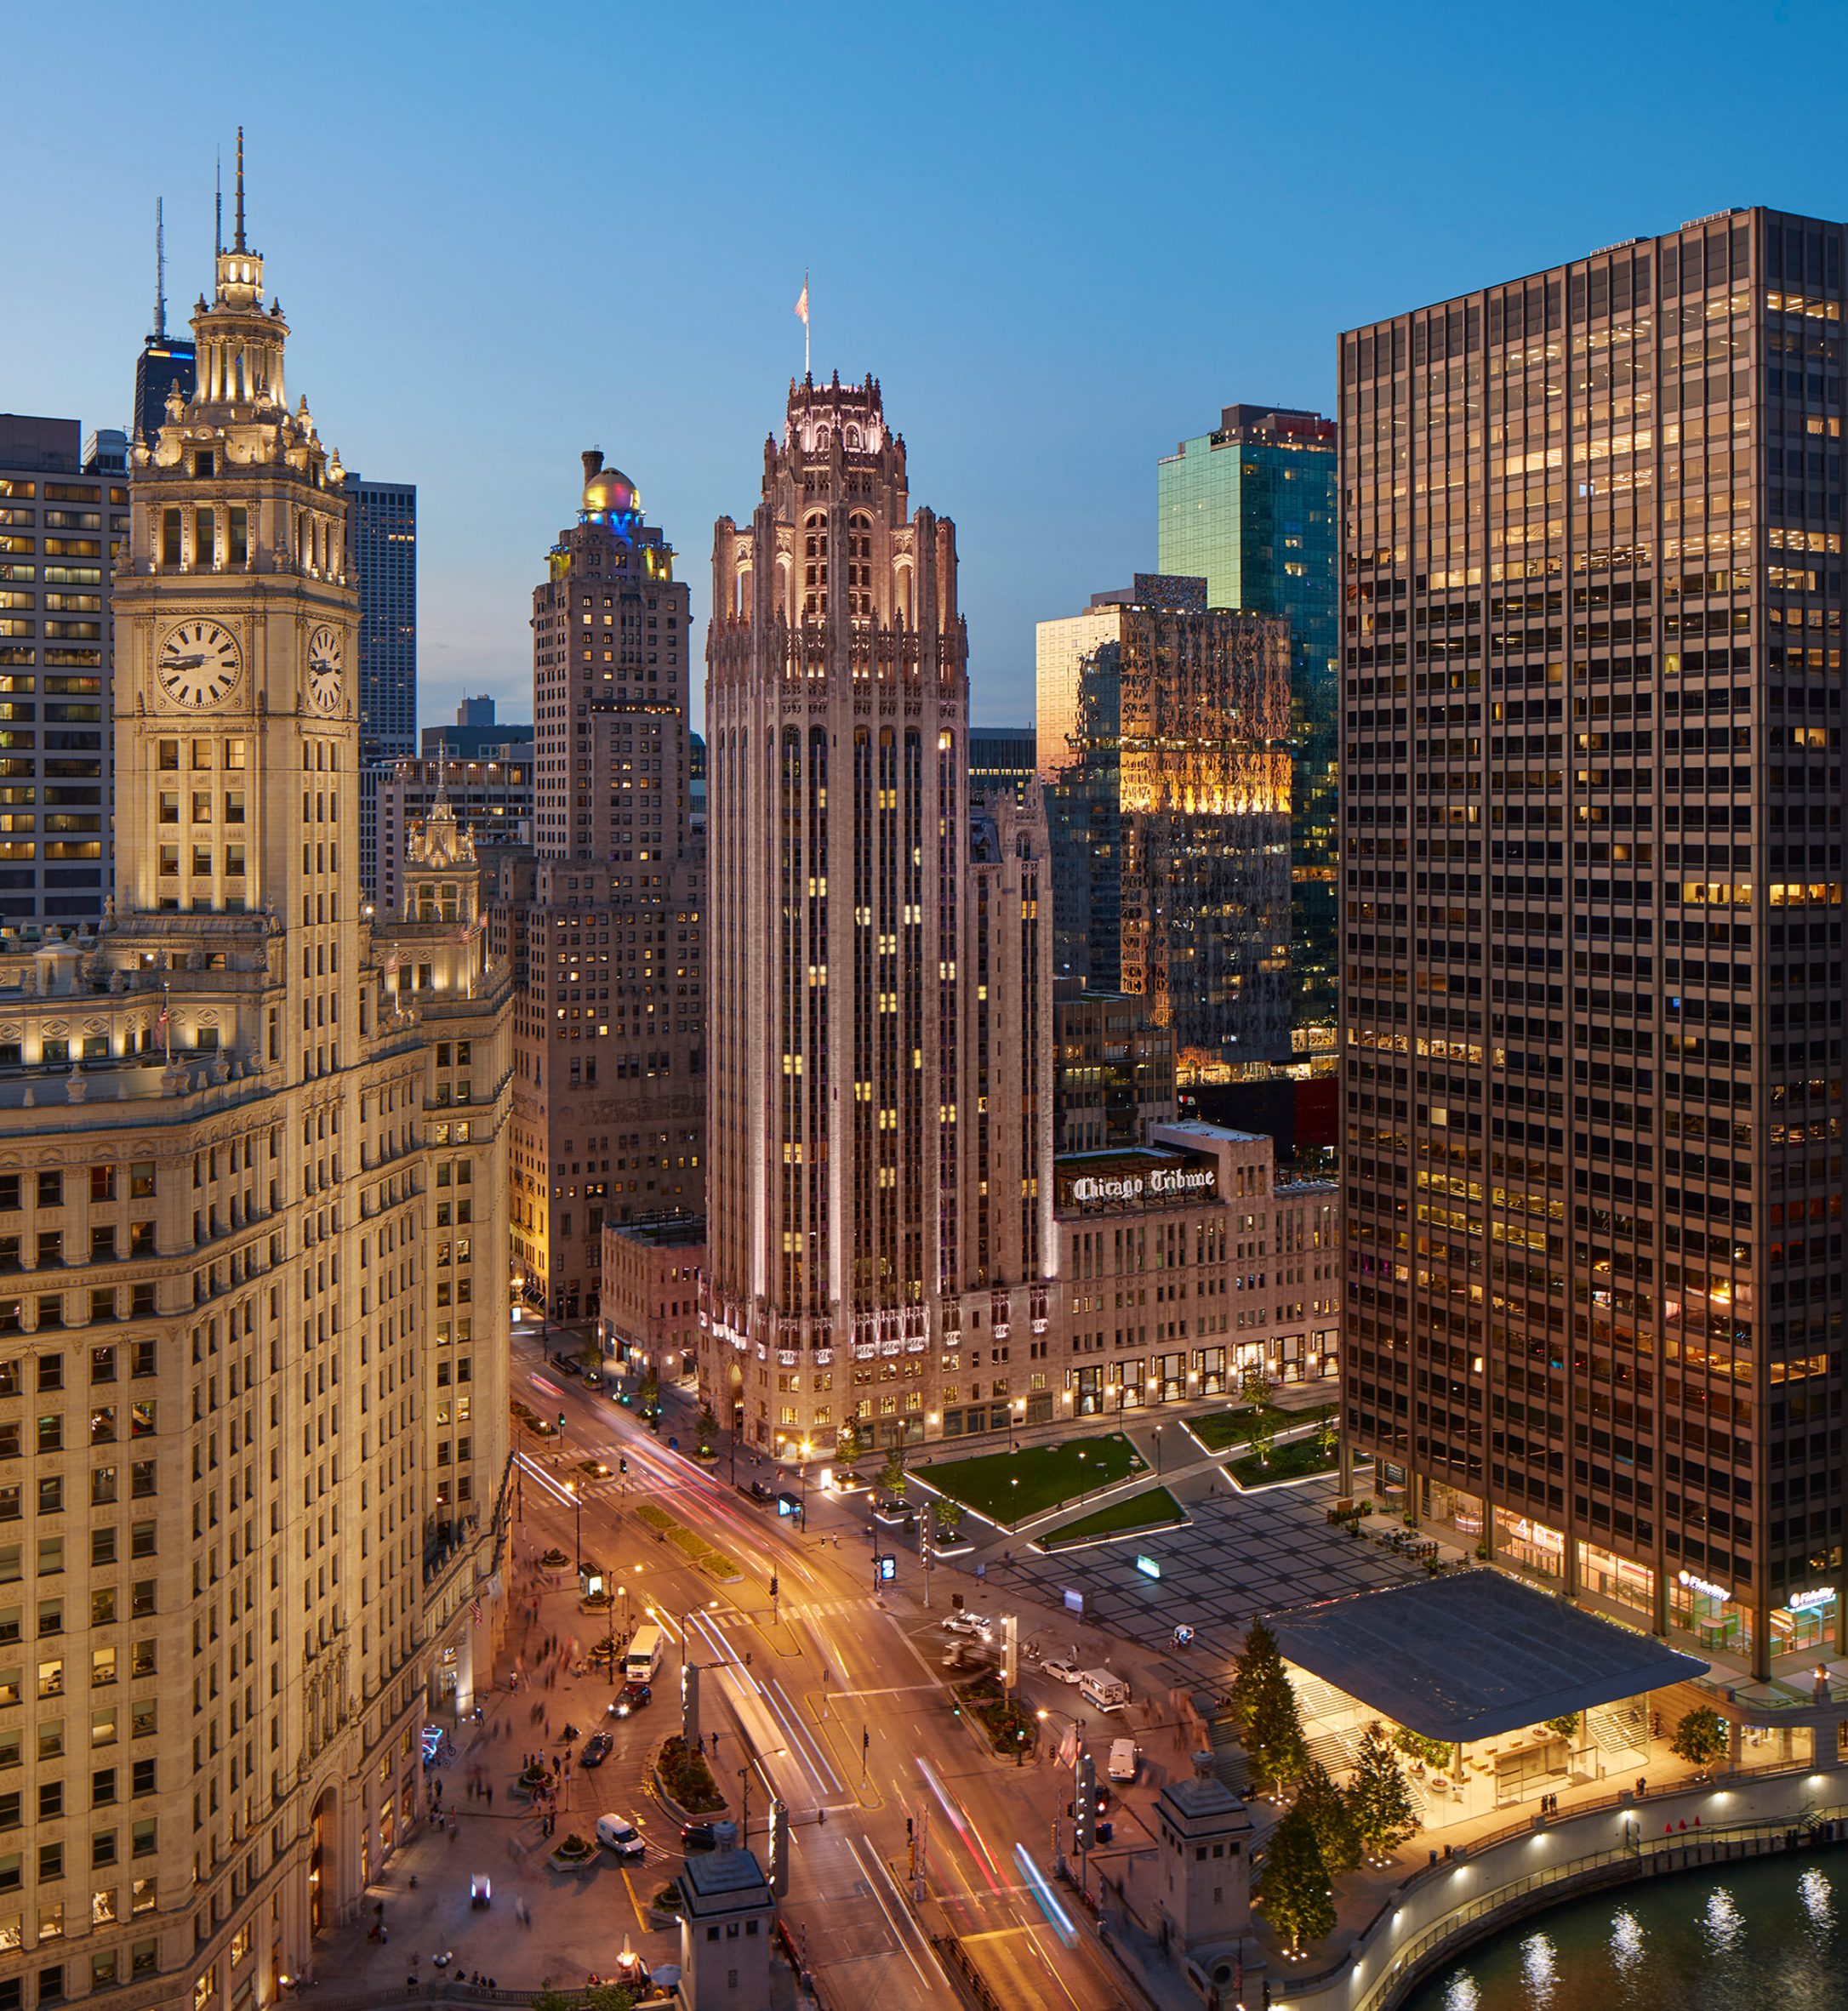 Chicago's iconic Tribune Tower